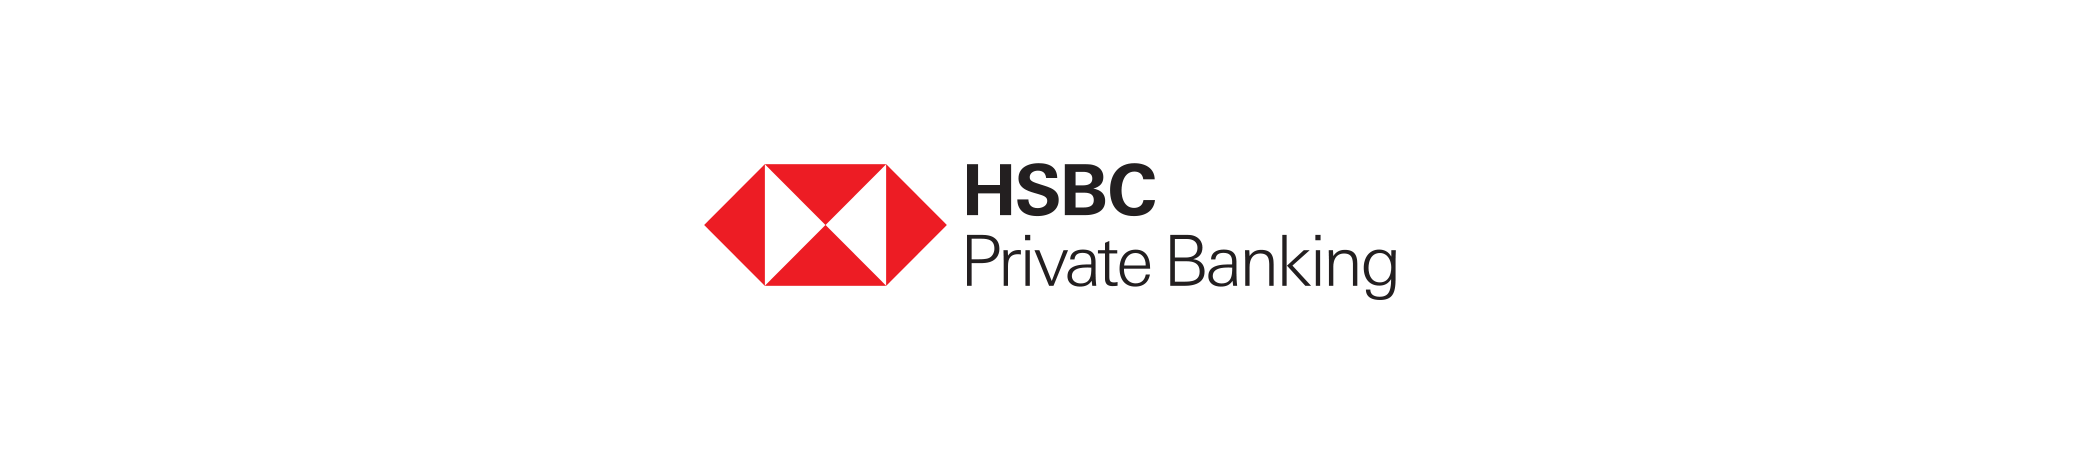 HSBC private banking Logo